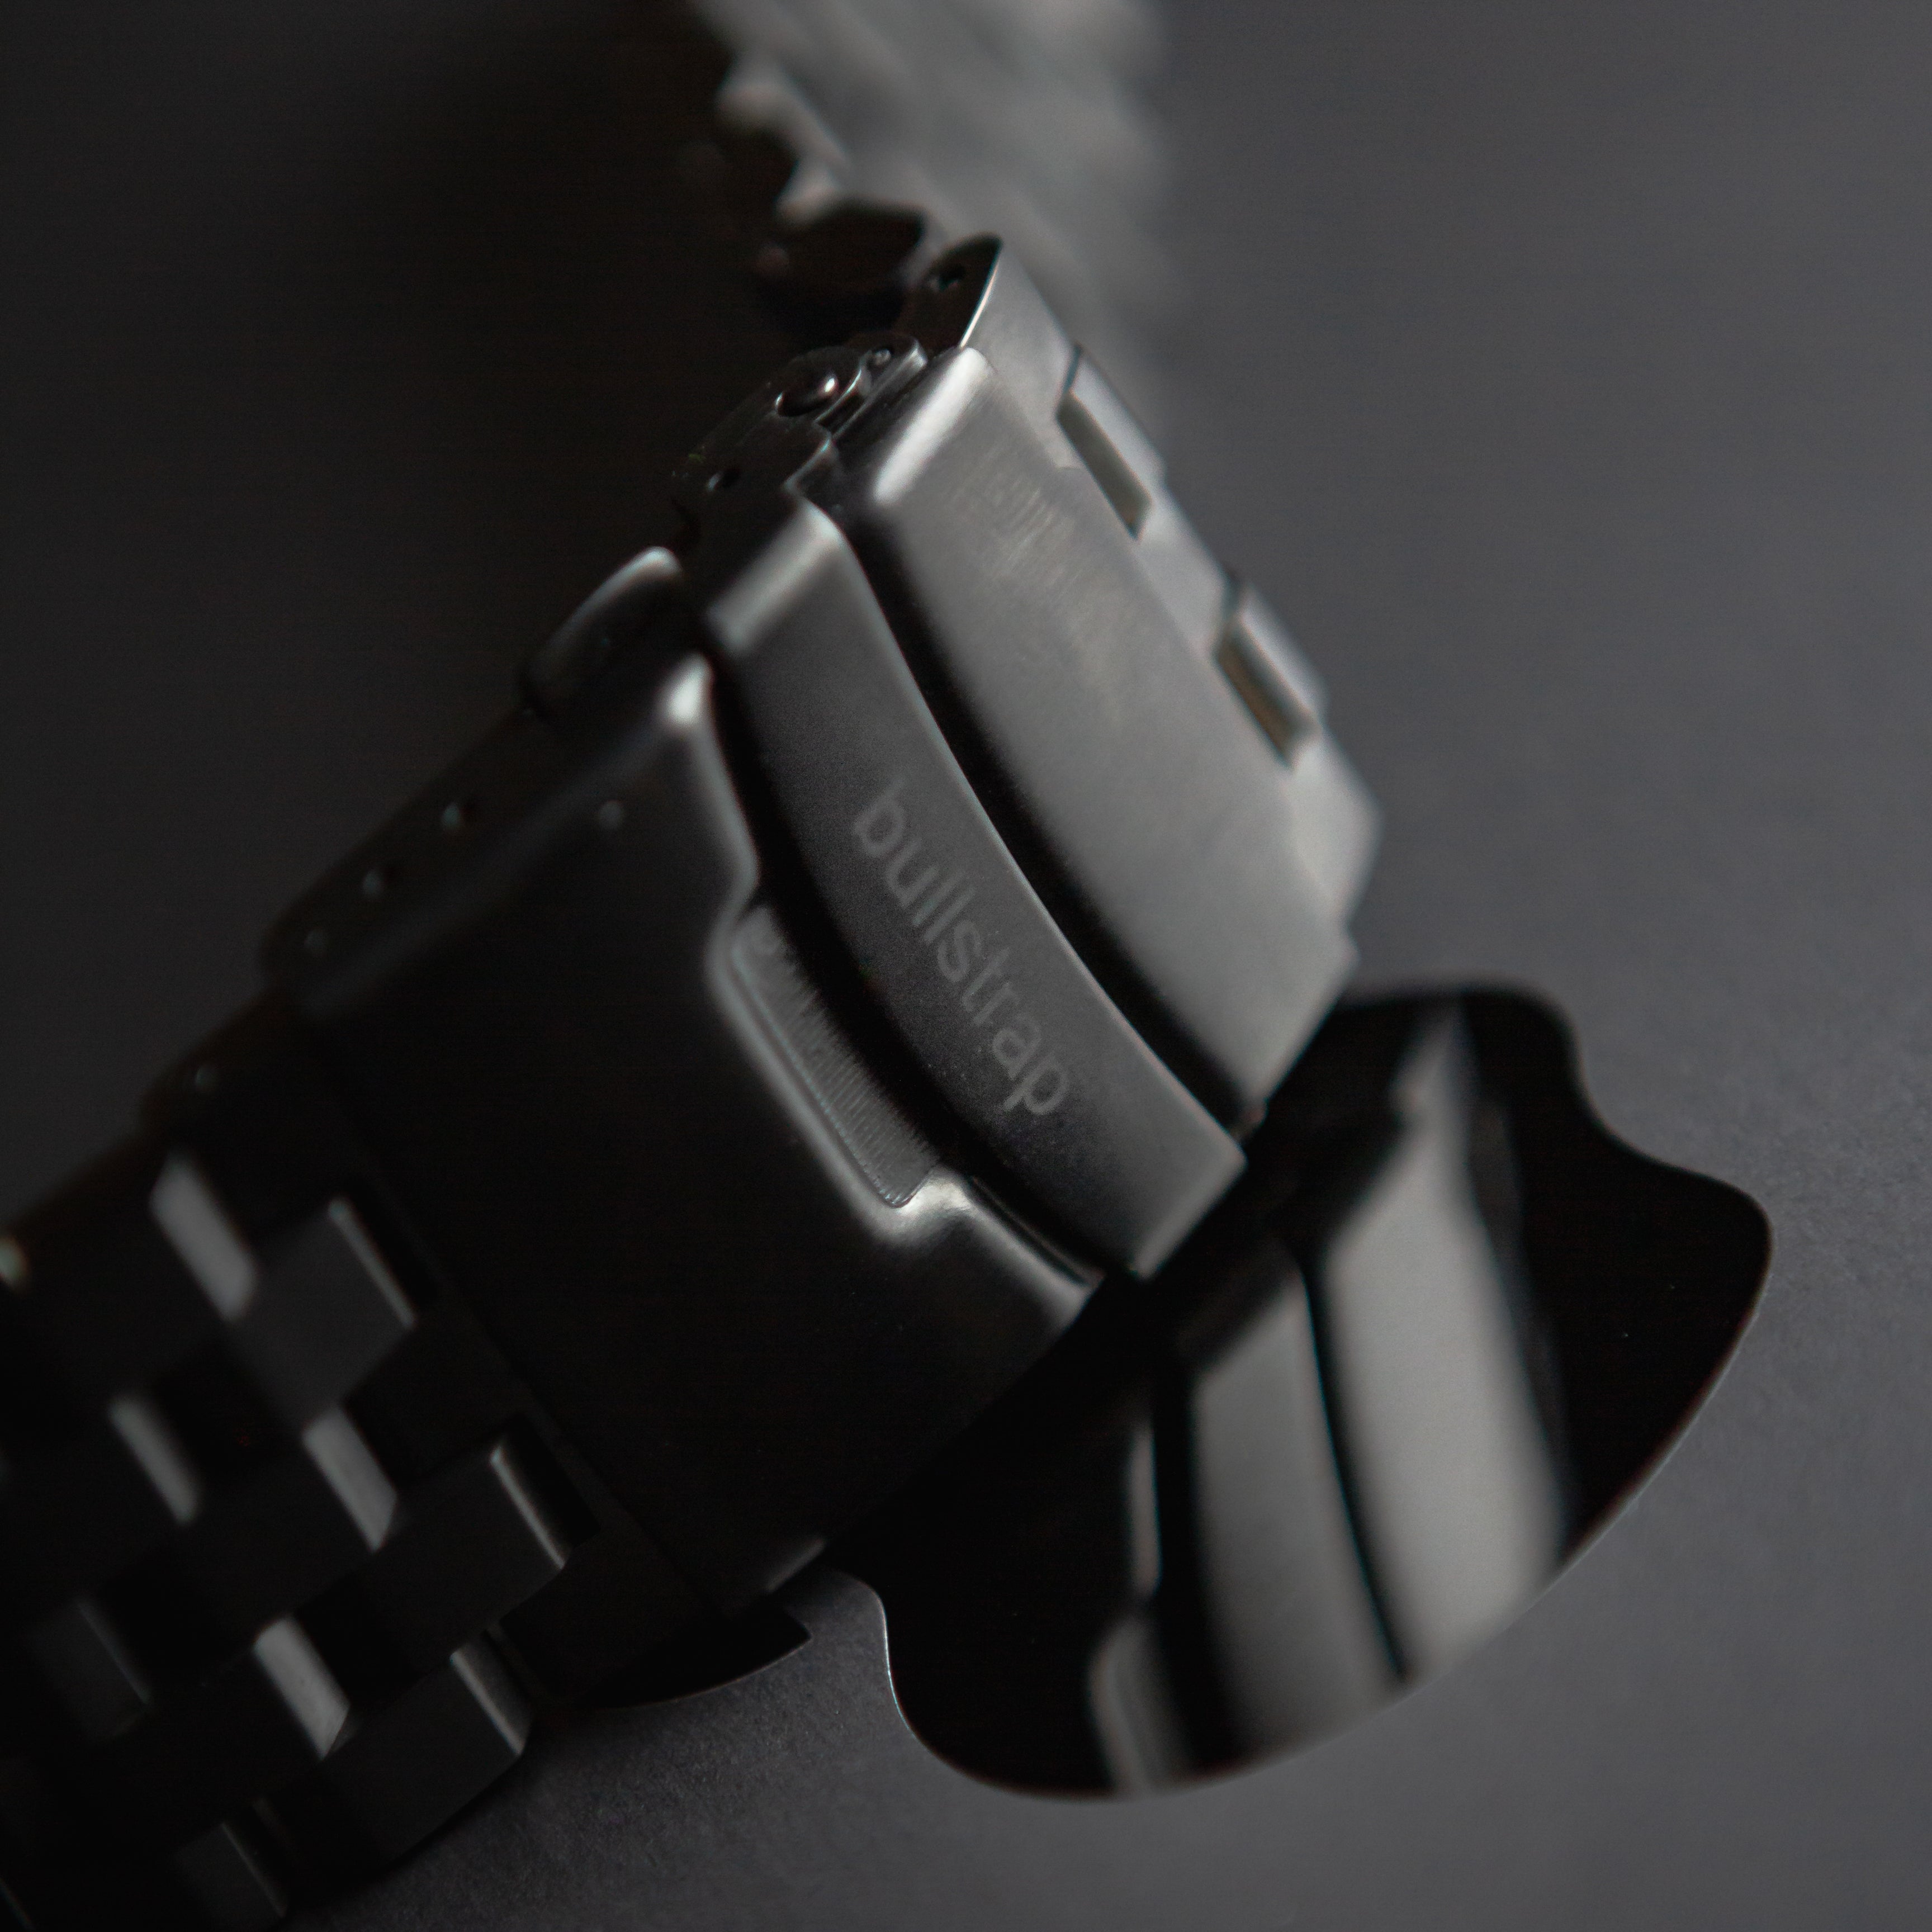 METAL Apple Watch Strap - Black Edition by Bullstrap